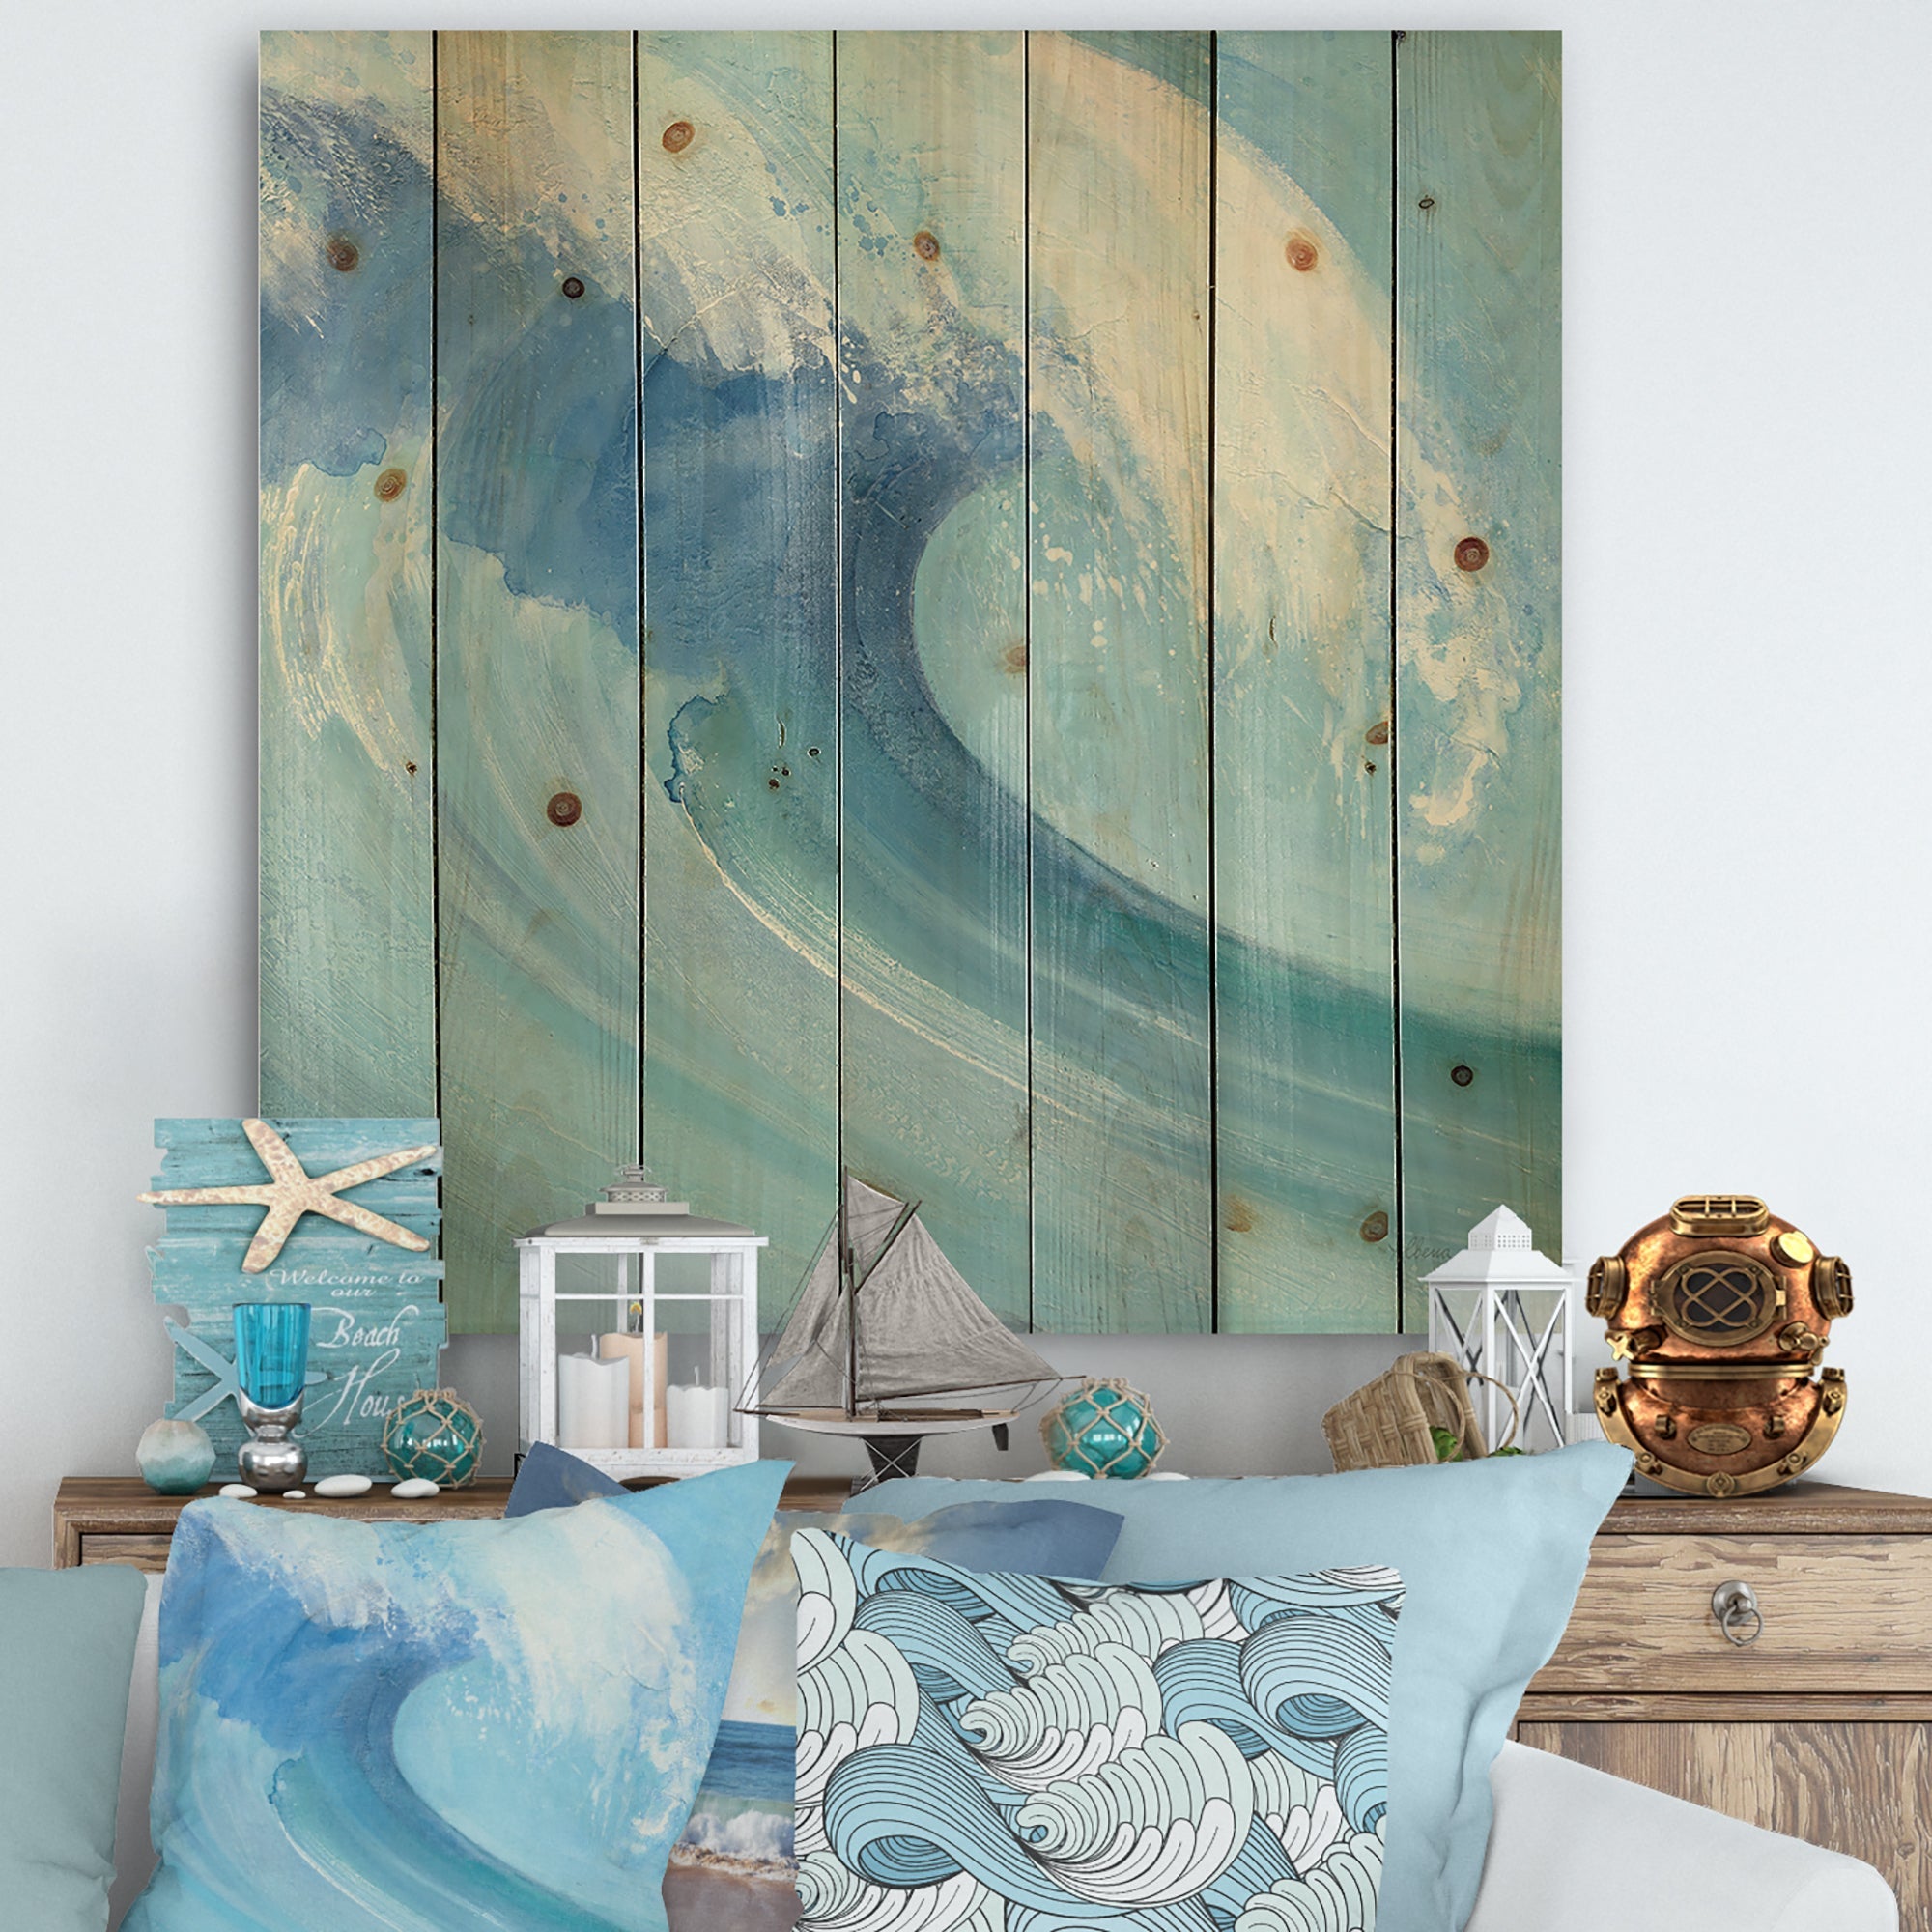 Ocean Wave Handpainted with White Foam - Nautical & Coastal Print on Natural Pine Wood - 16x16